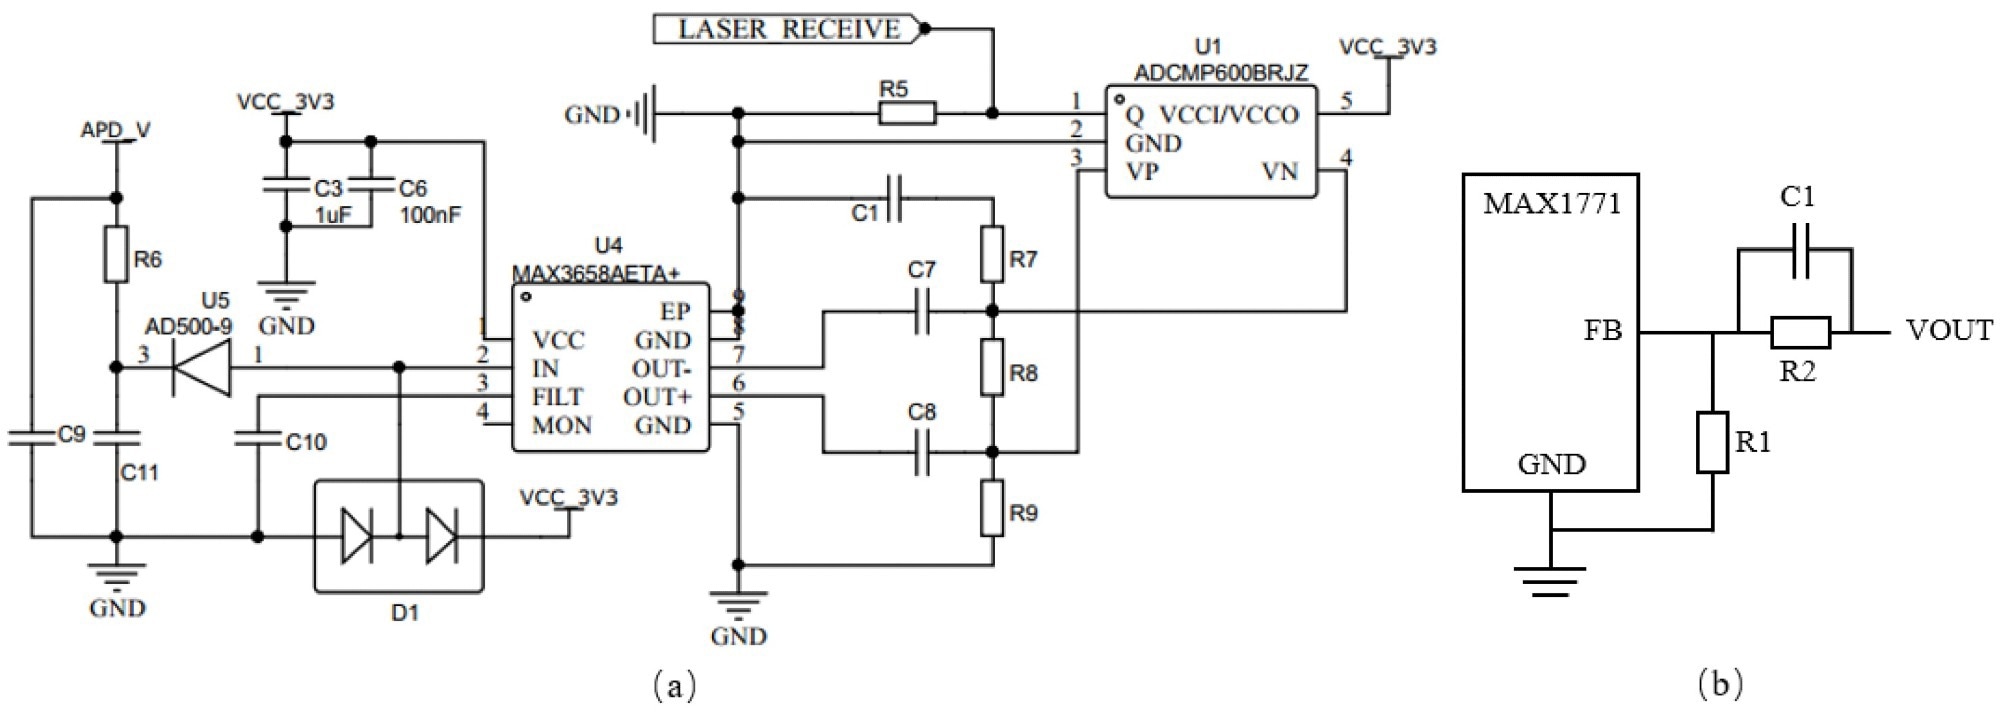 (a) Receiver circuit. (b) Bias voltage circuit.